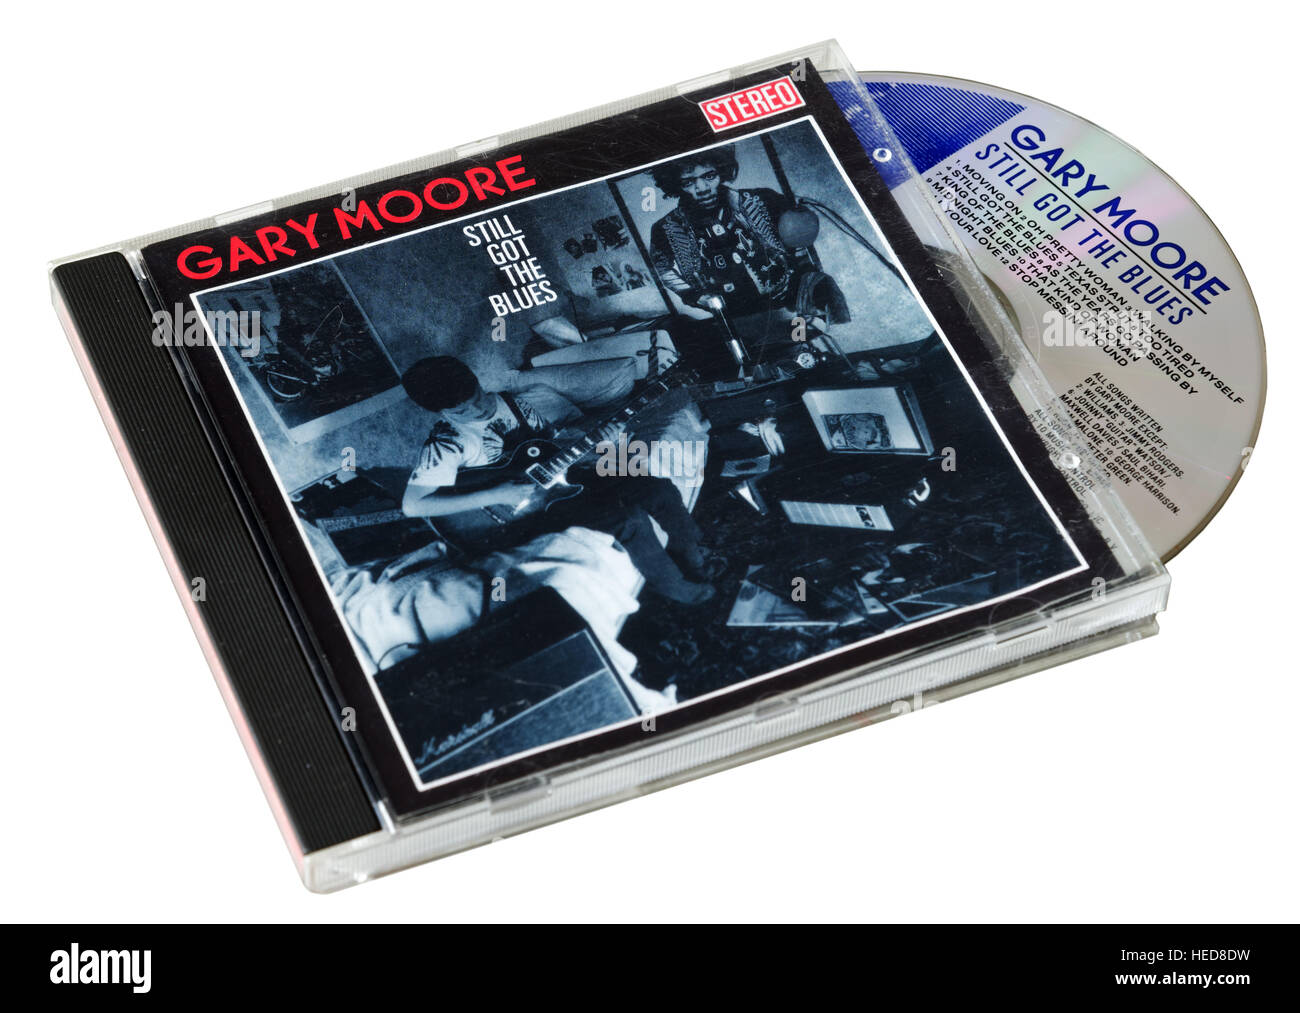 Gary Moore Still Got The Blues CD Stock Photo